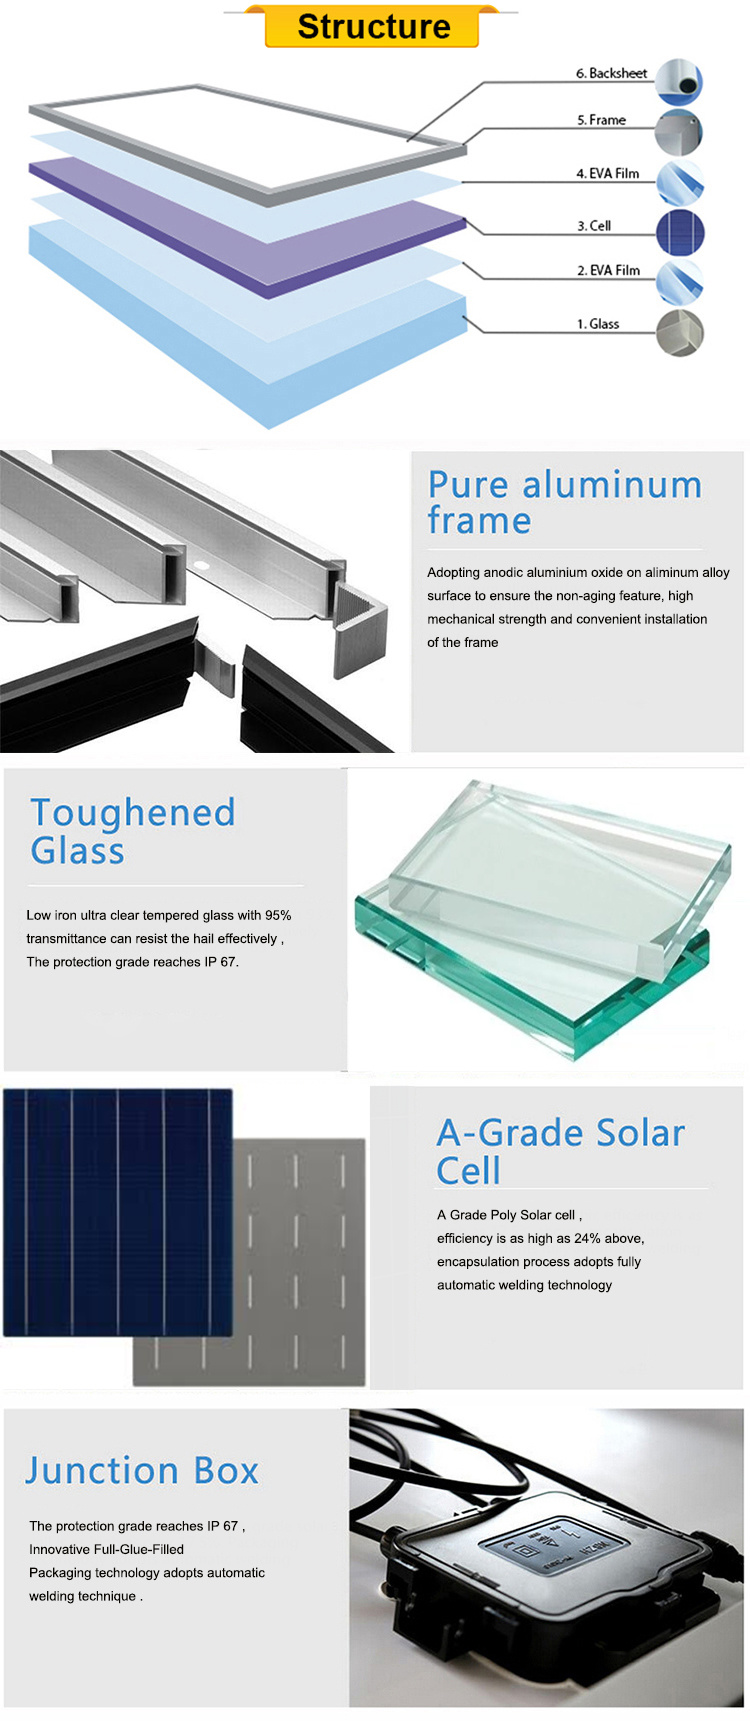 Yangtze Trina Solar Panel Solar Panel Airconditioner 460W Half Cut Perc Mono Solar Panel